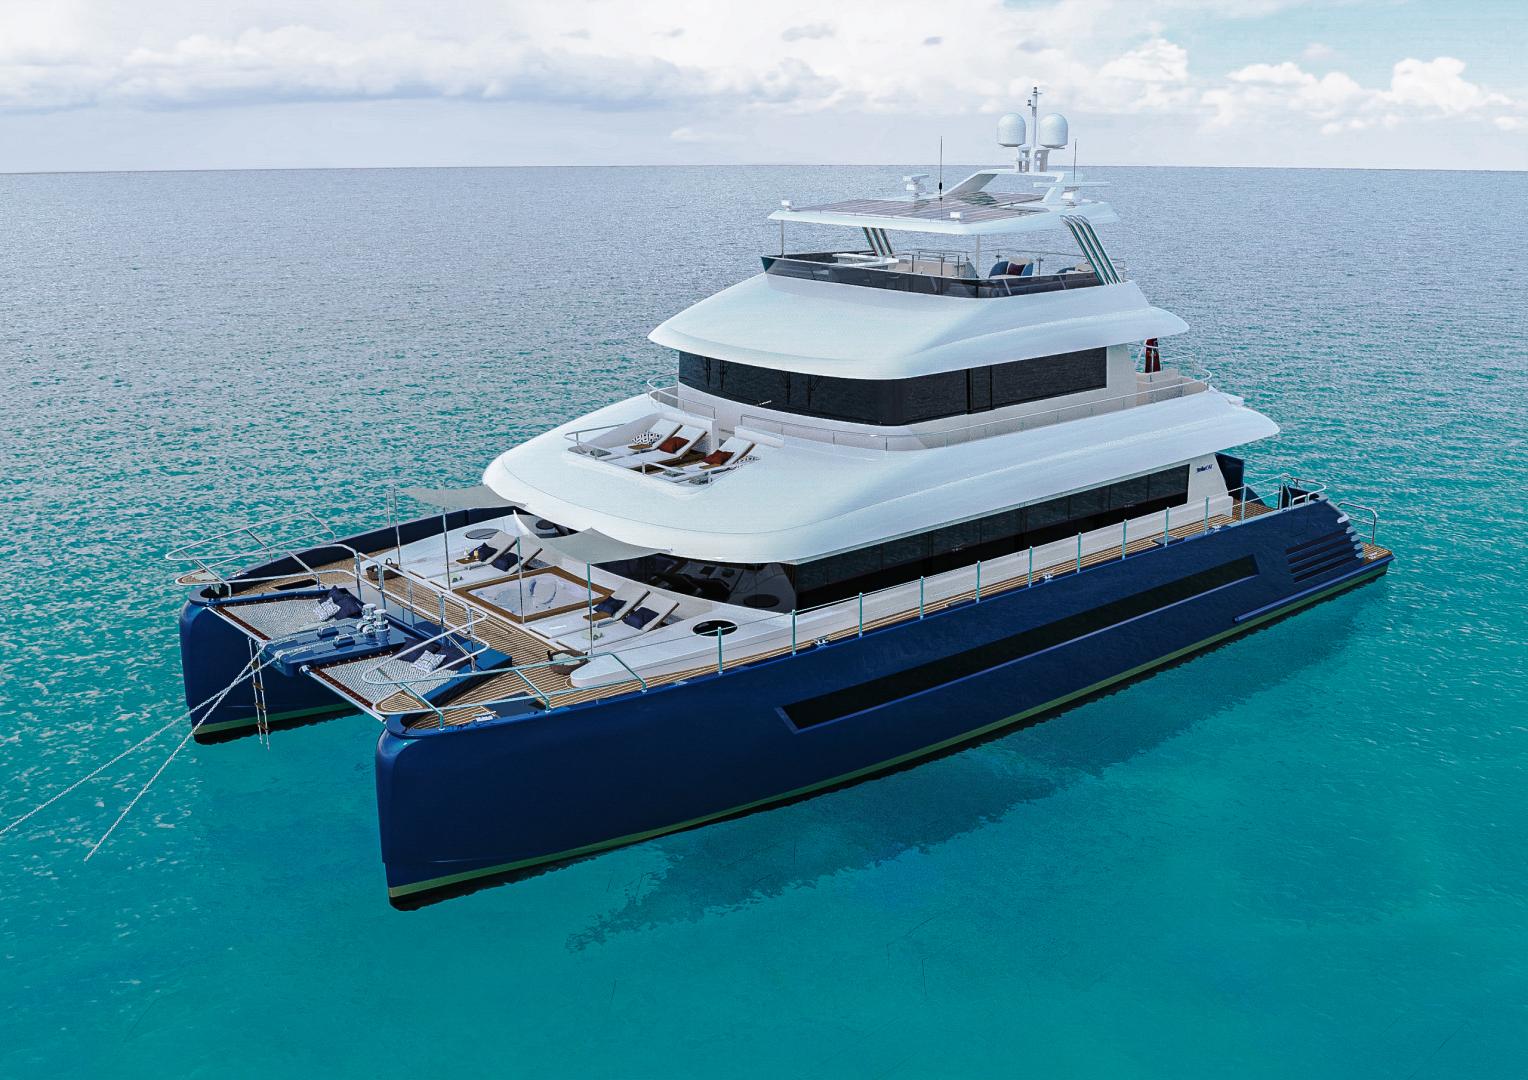 Stellarcat introduces 25m tri-deck powercat model